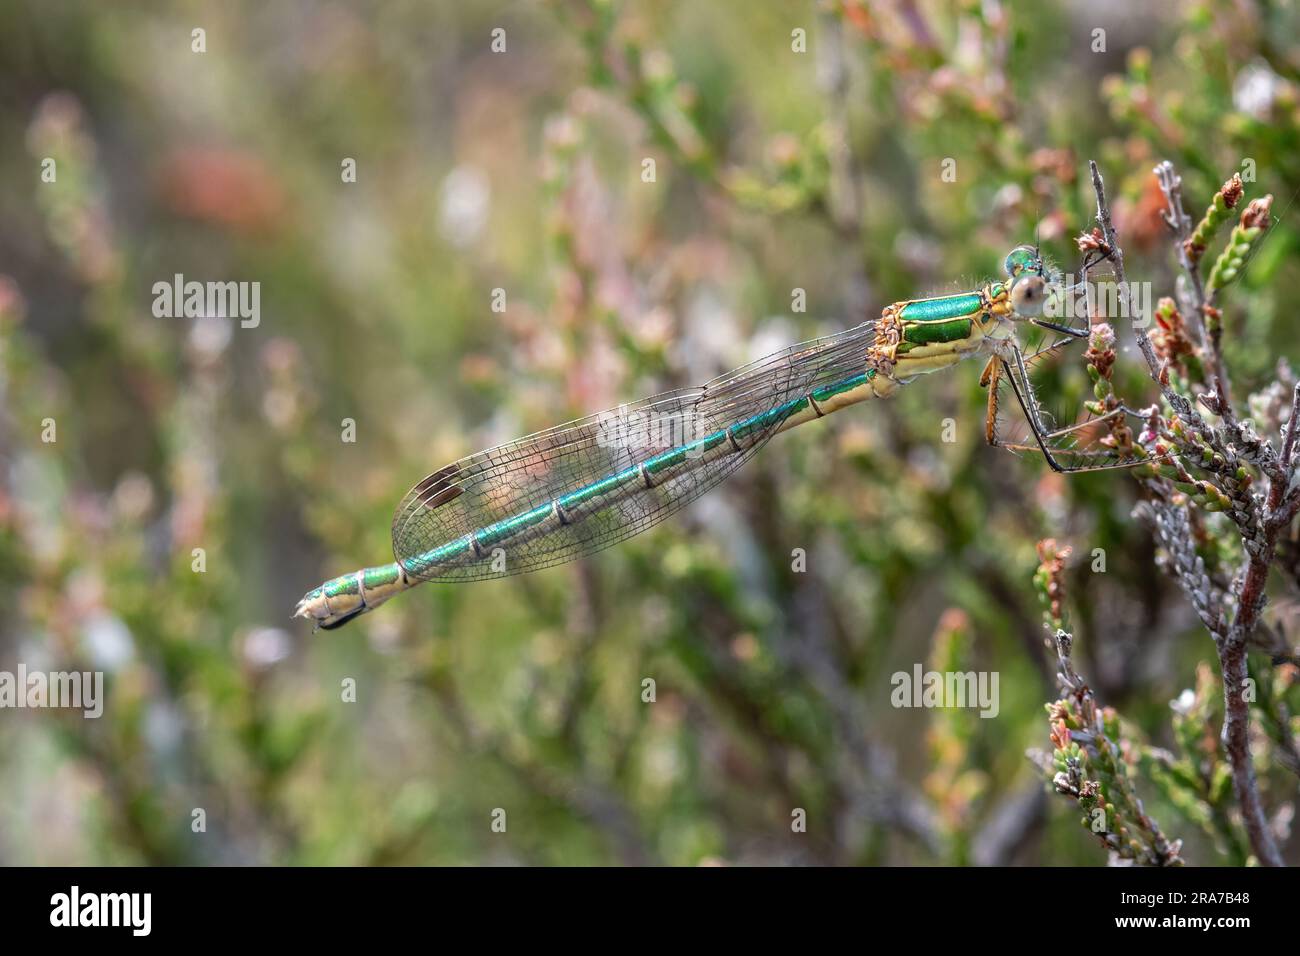 Emerald damselfly (Lestes sponsa), England, UK Stock Photo